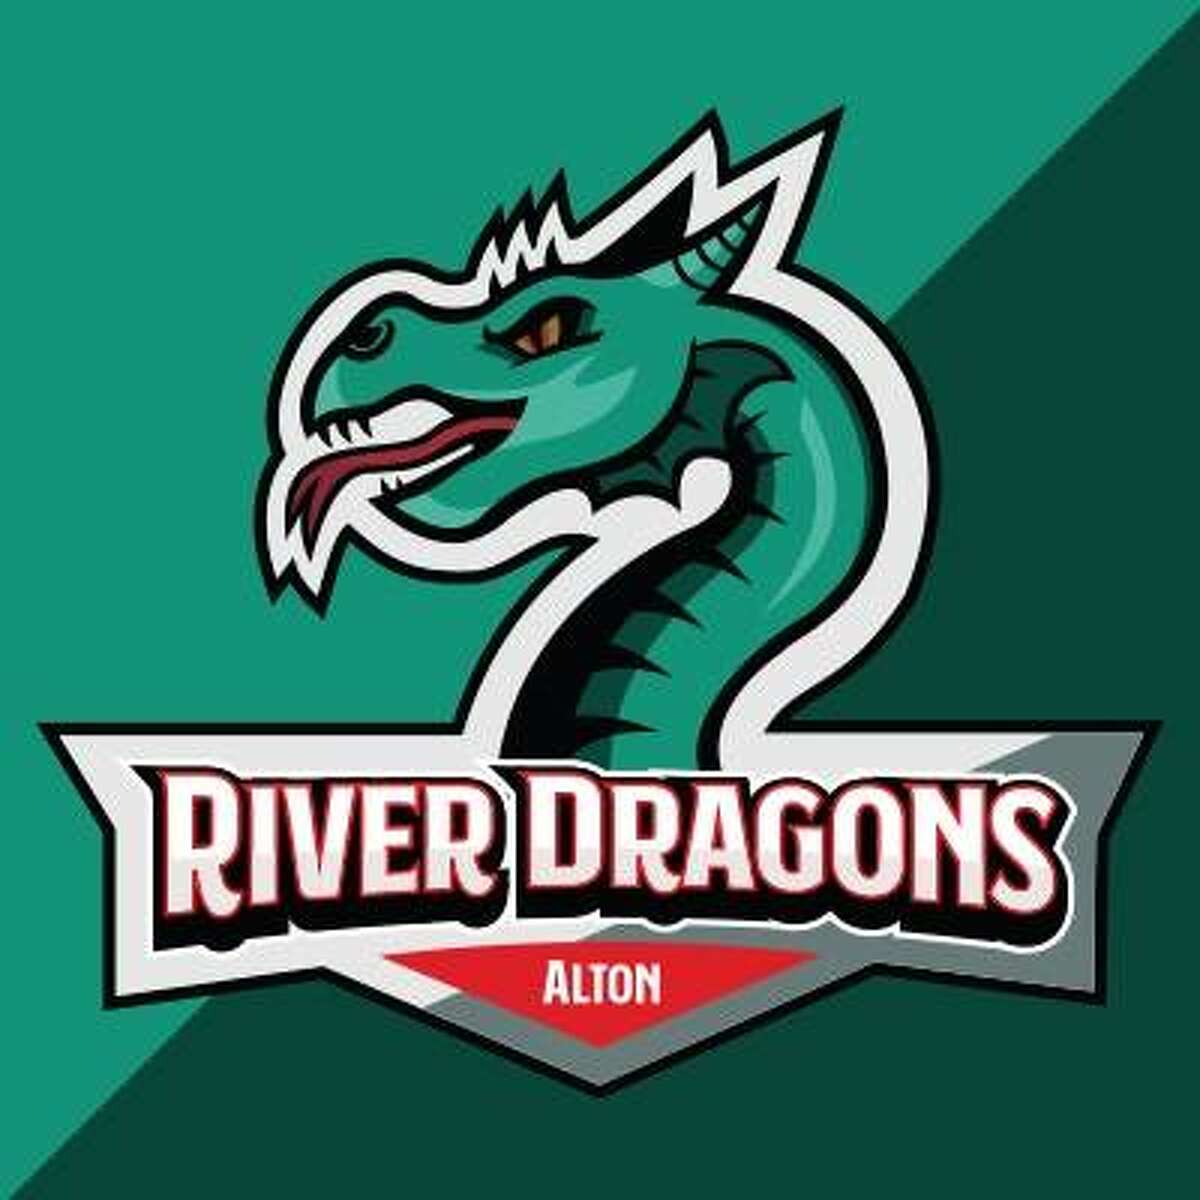 Alton River Dragons take on Quincy at 4:35 p.m. Sunday at Lloyd Hopkins Field, 98 Arnold Palmer Road, Alton.